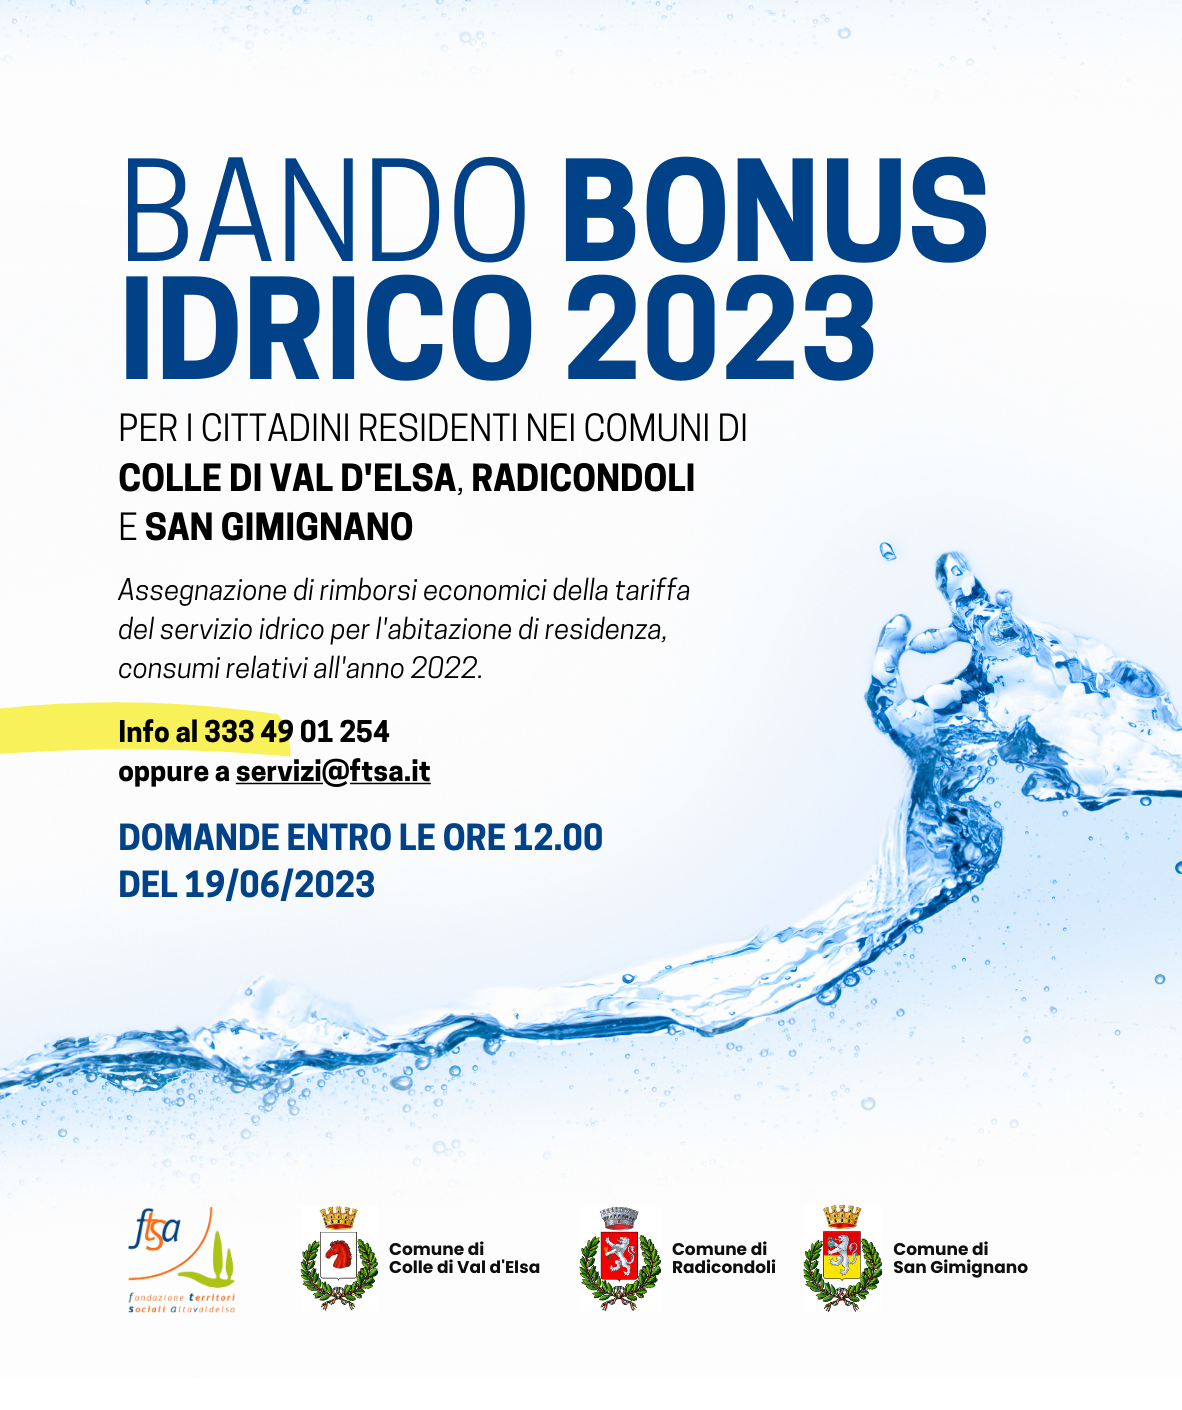 Bando BONUS IDRICO 2023